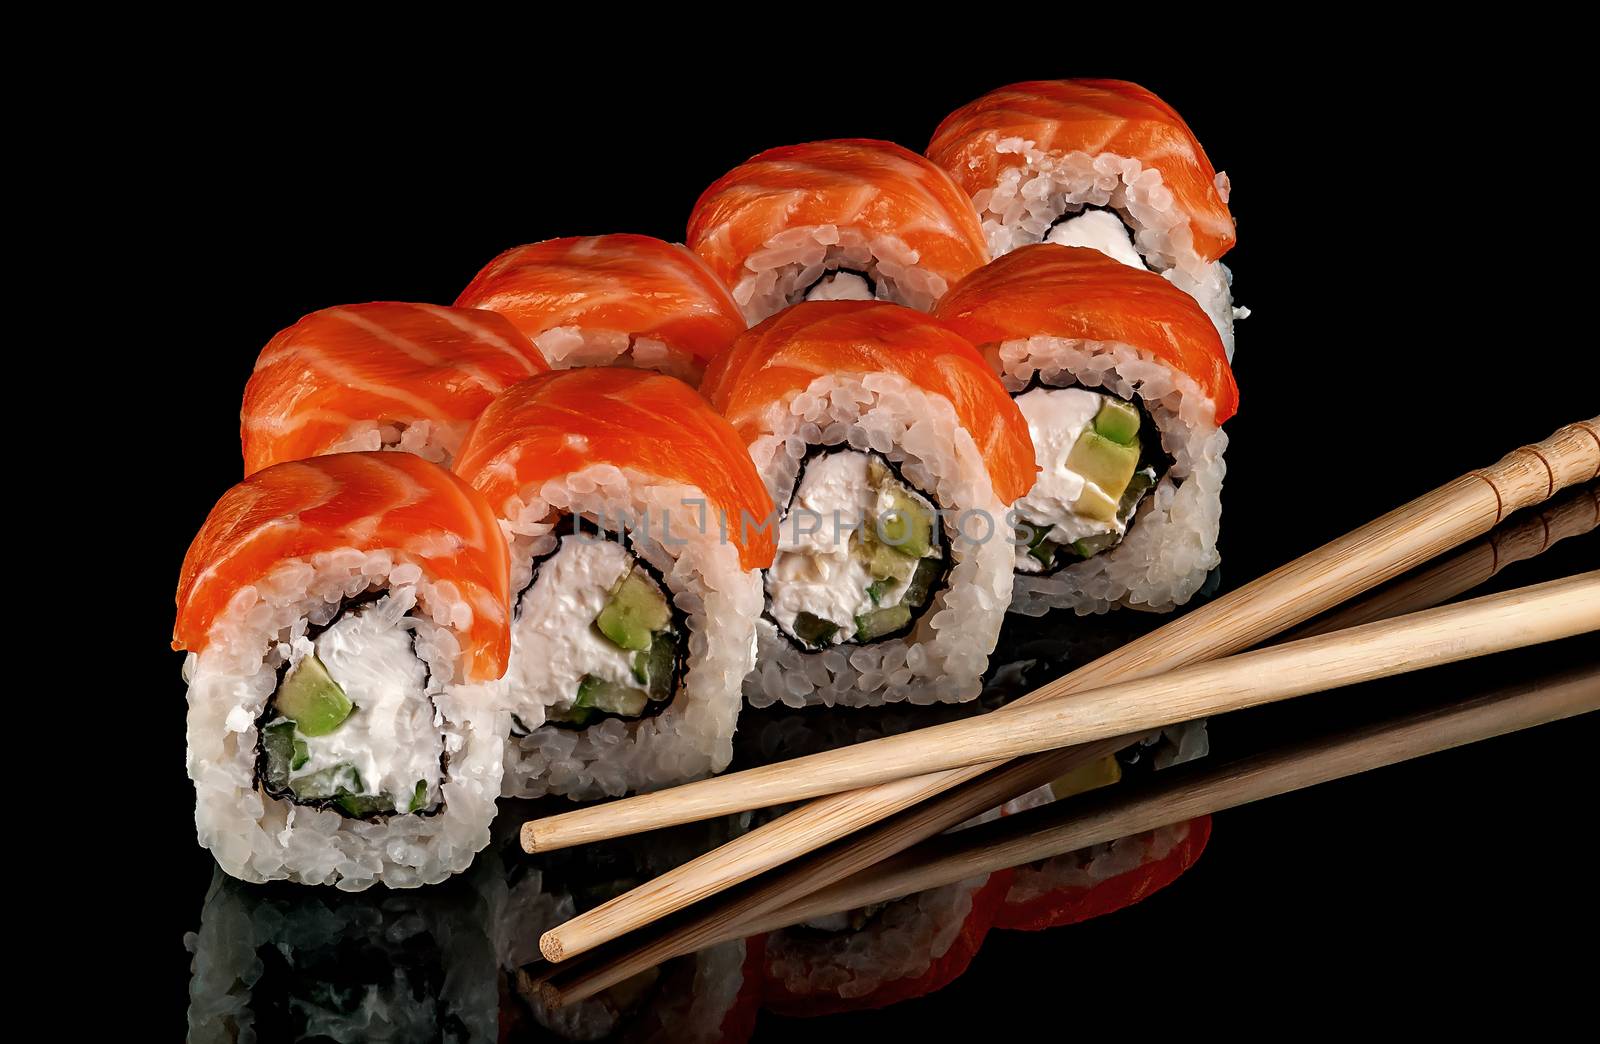 Sushi rolls Philadelphia with chopsticks by Cipariss